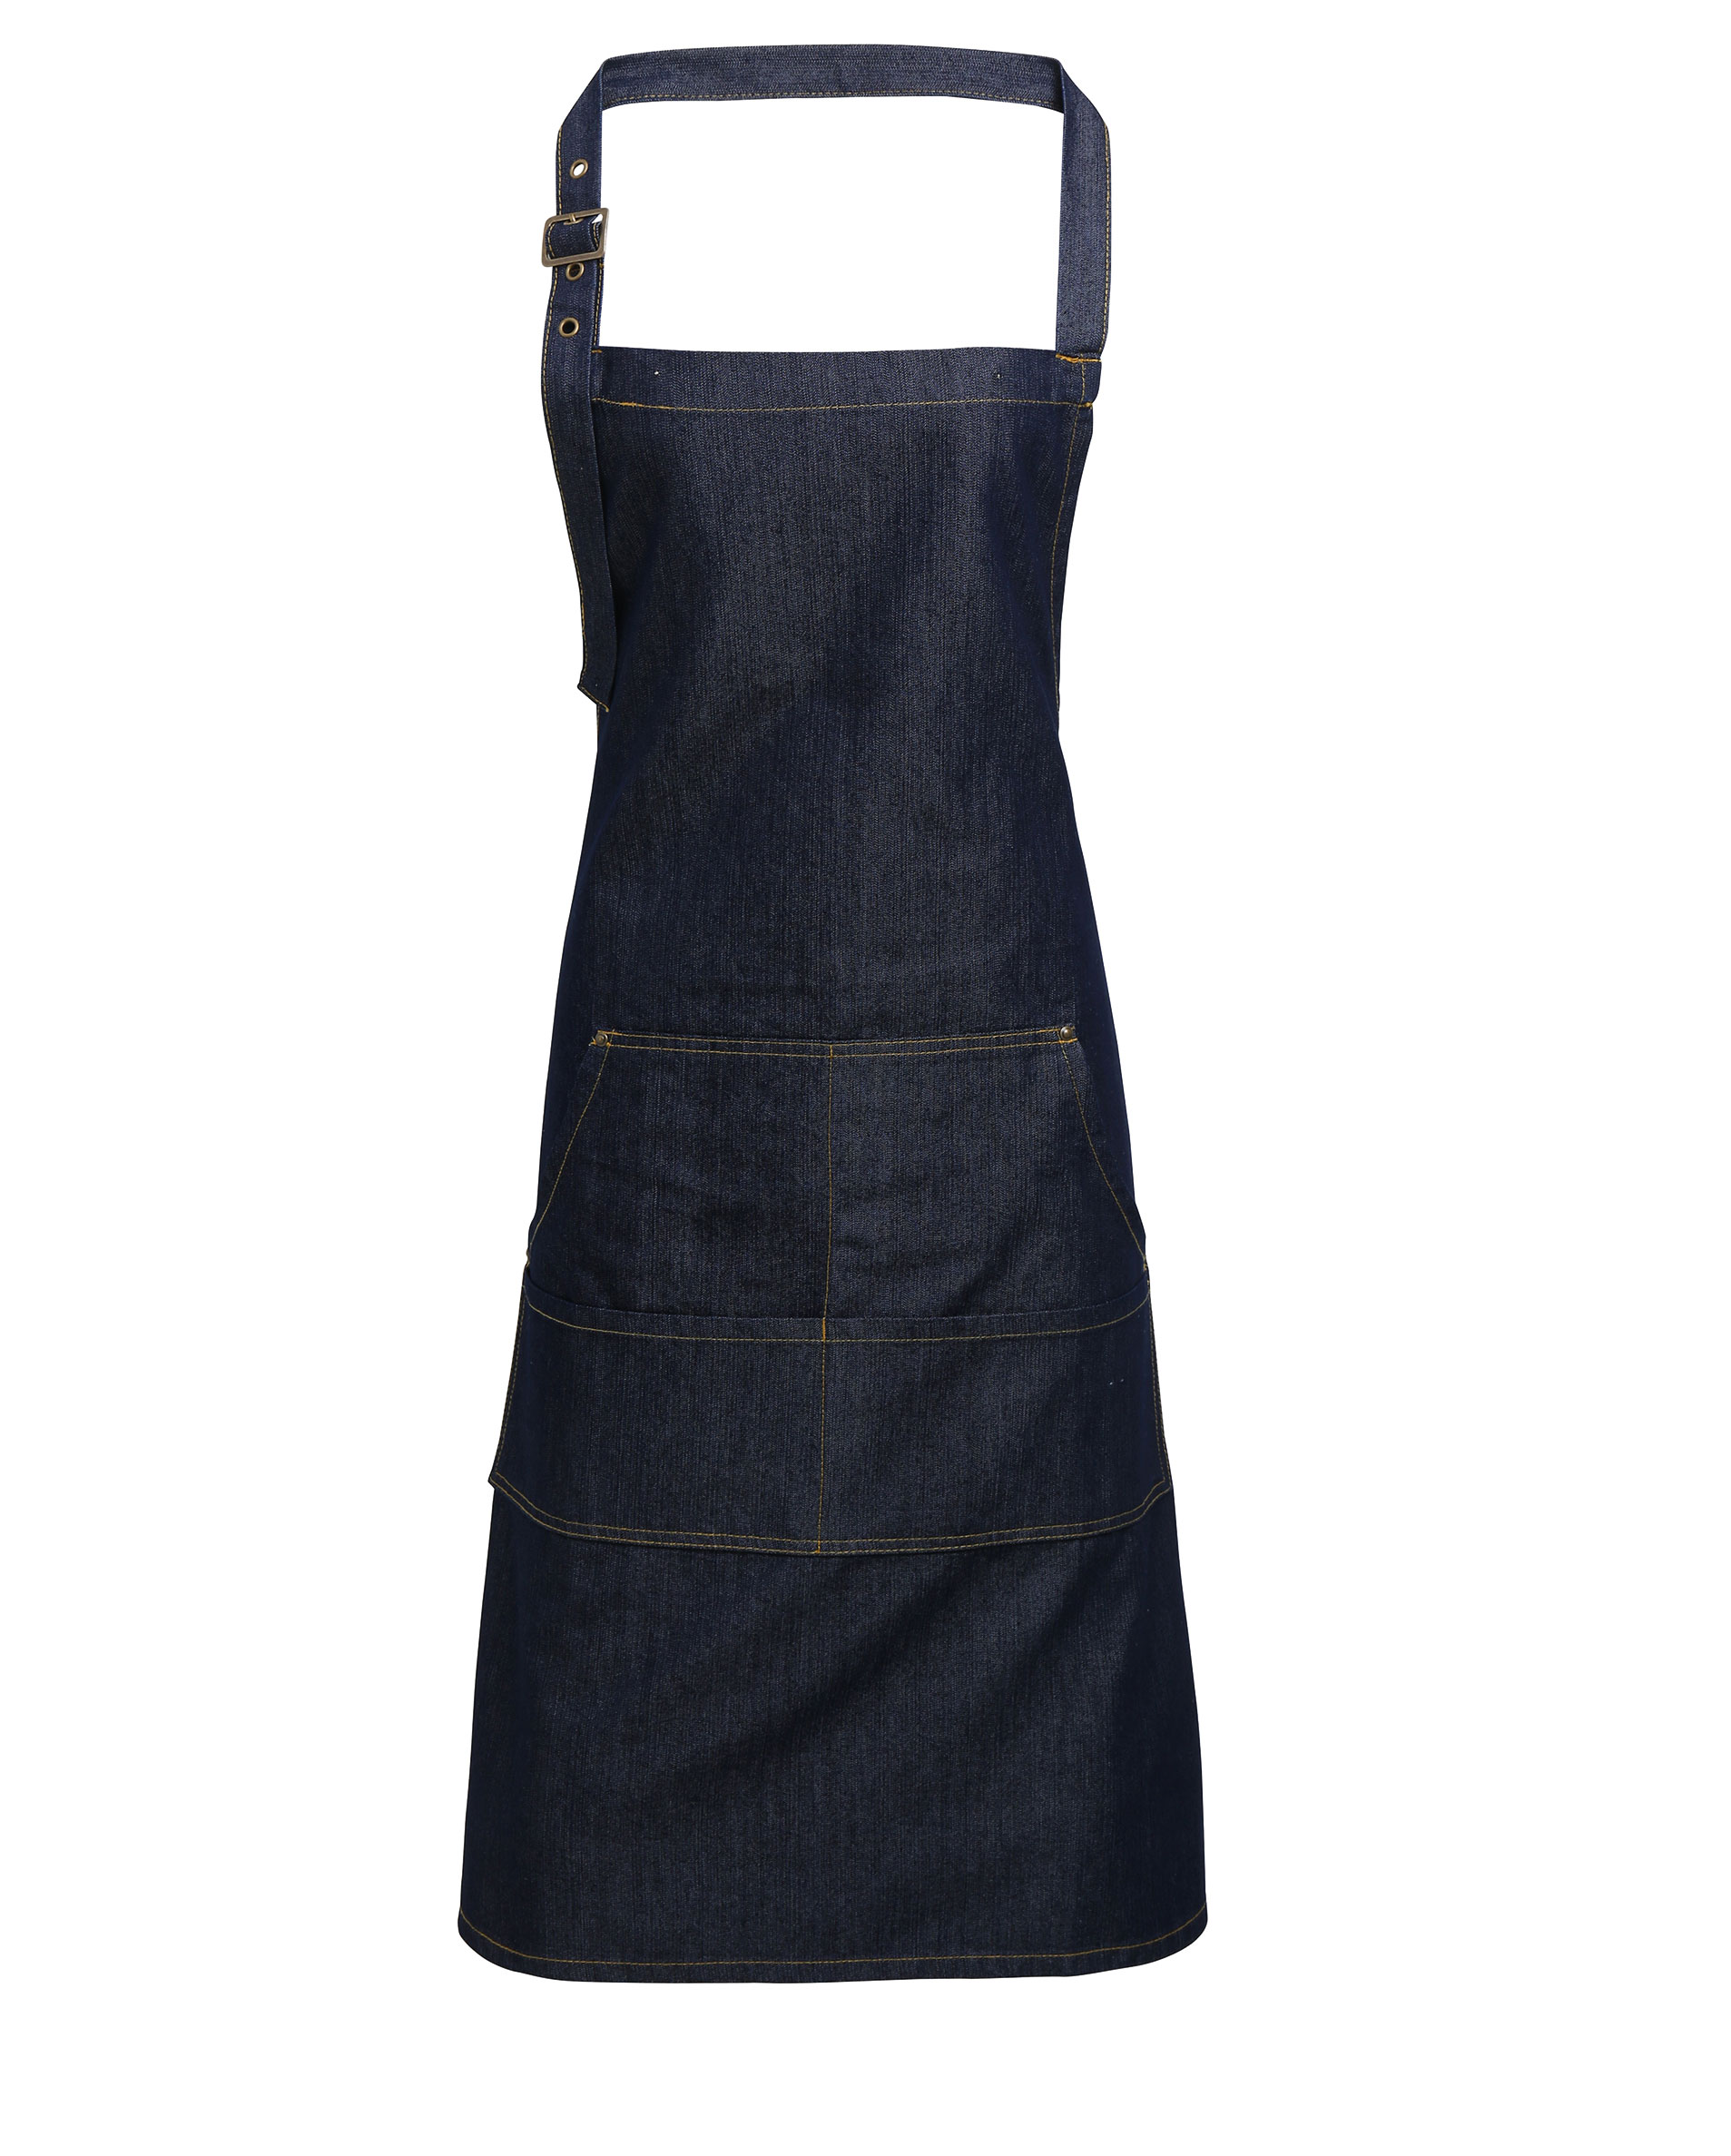 Denim bib apron with denim seams 72 x 86 cm Premier® Indigo Denim (approx. Pantone 2767)